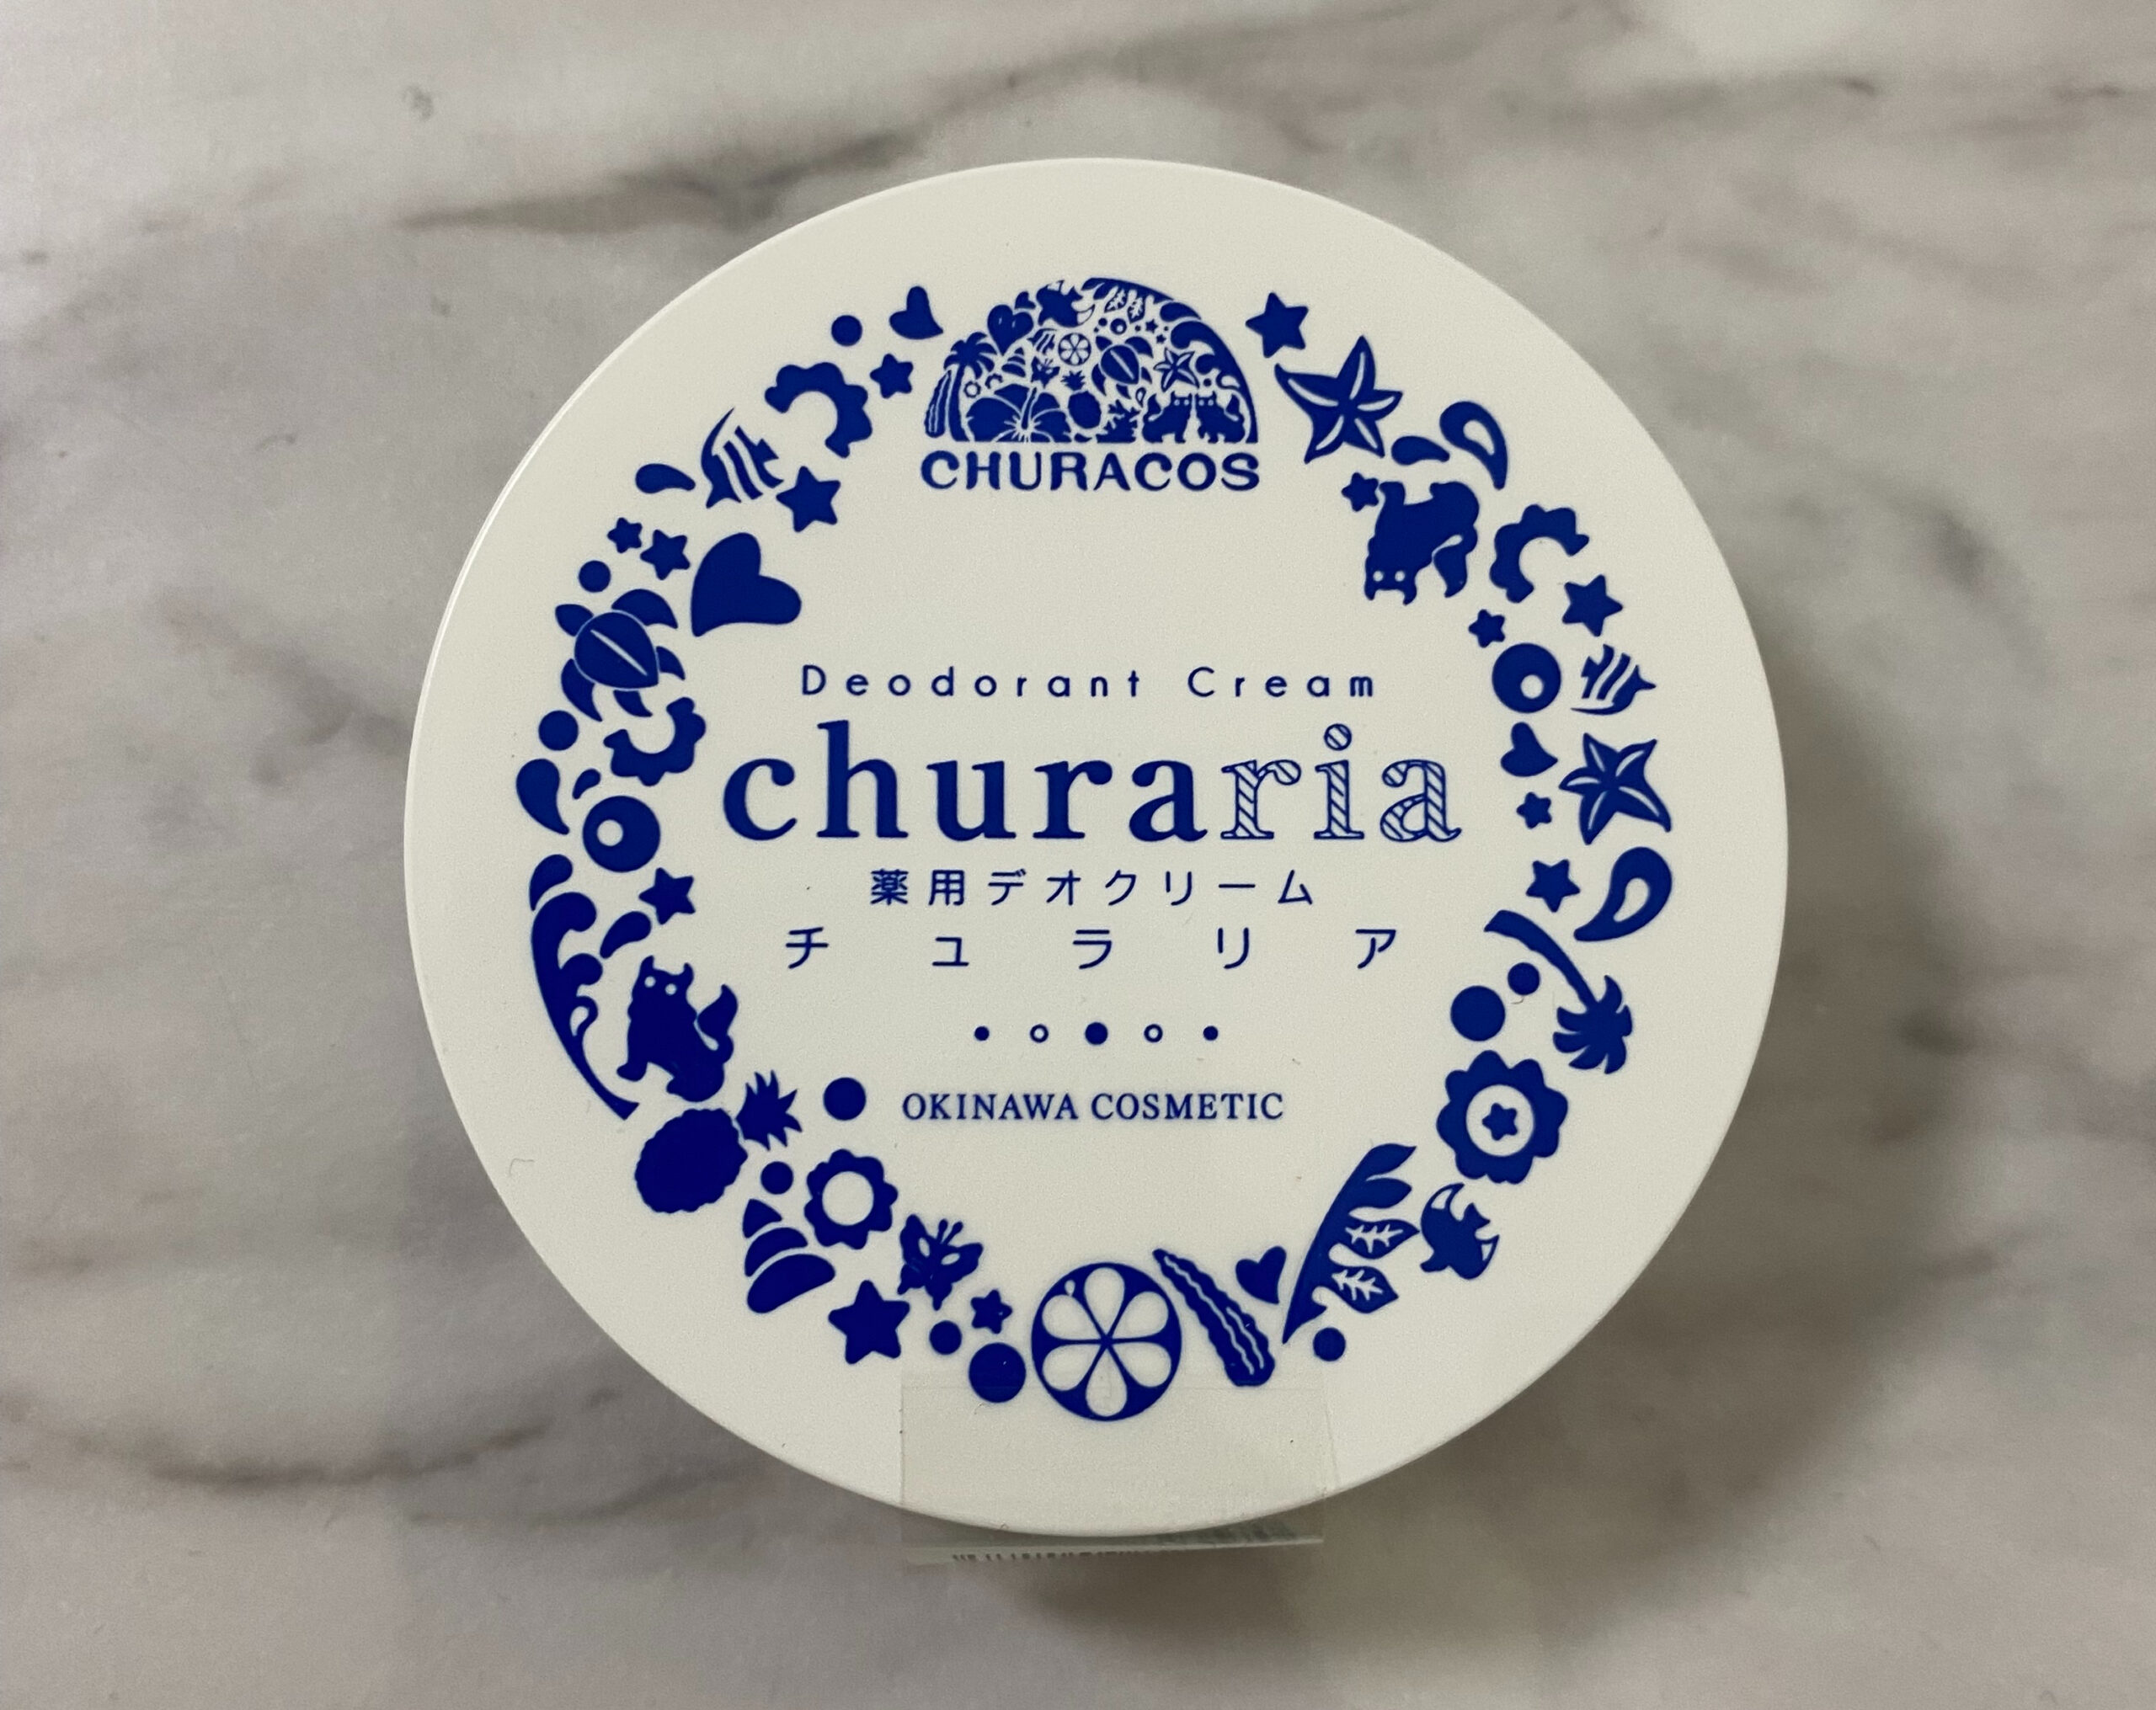 CHURACOS デオドラントクリーム churaria チュラリア 27g - 通販